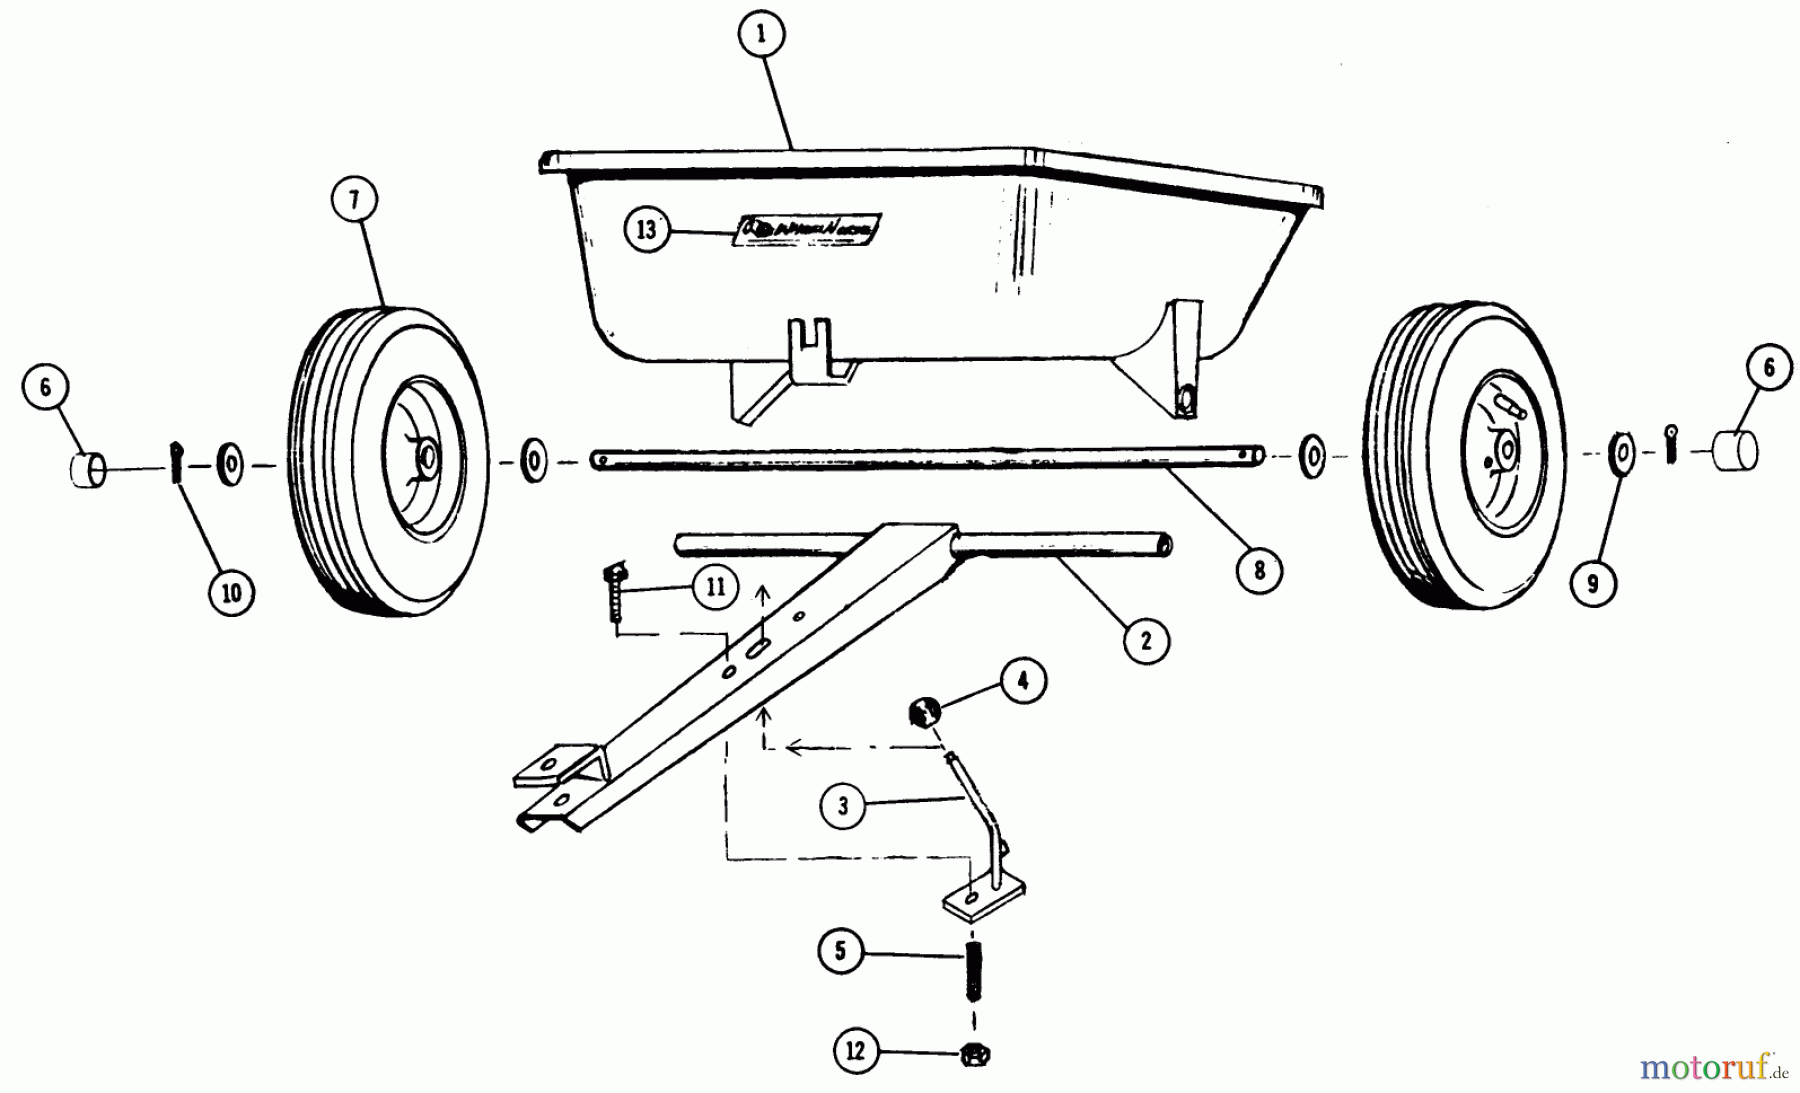  Toro Neu Utility Carts 7-2211 - Toro 2-Wheel Cart, 1971 PARTS LIST-DUMP TRAILER MODEL 7-2211 (FORMERLY LTD-244)